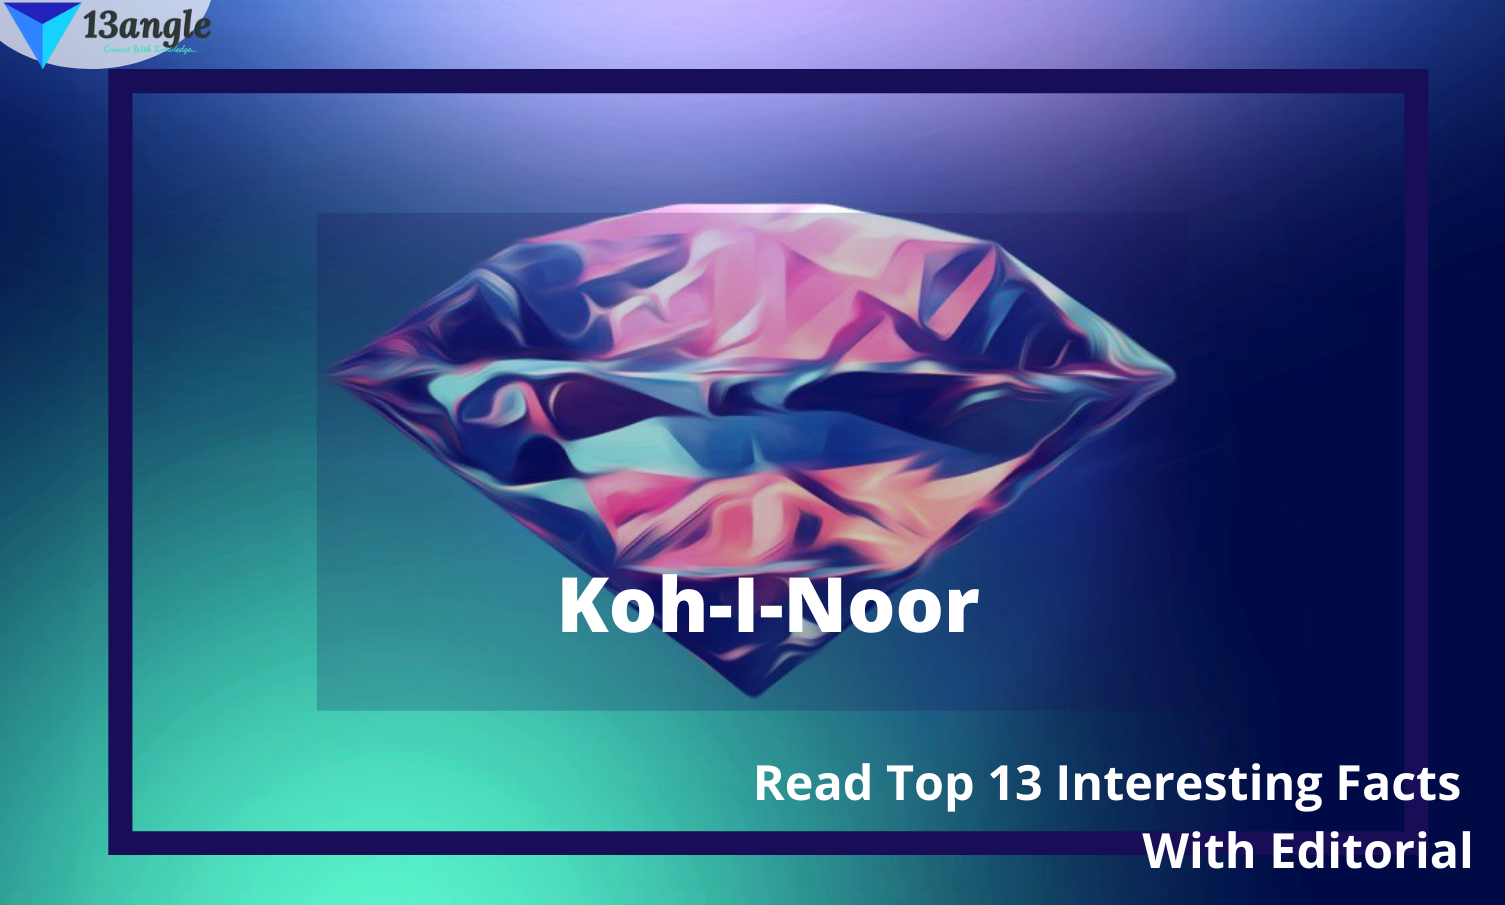 Kohinoor diamond- 13angle.com